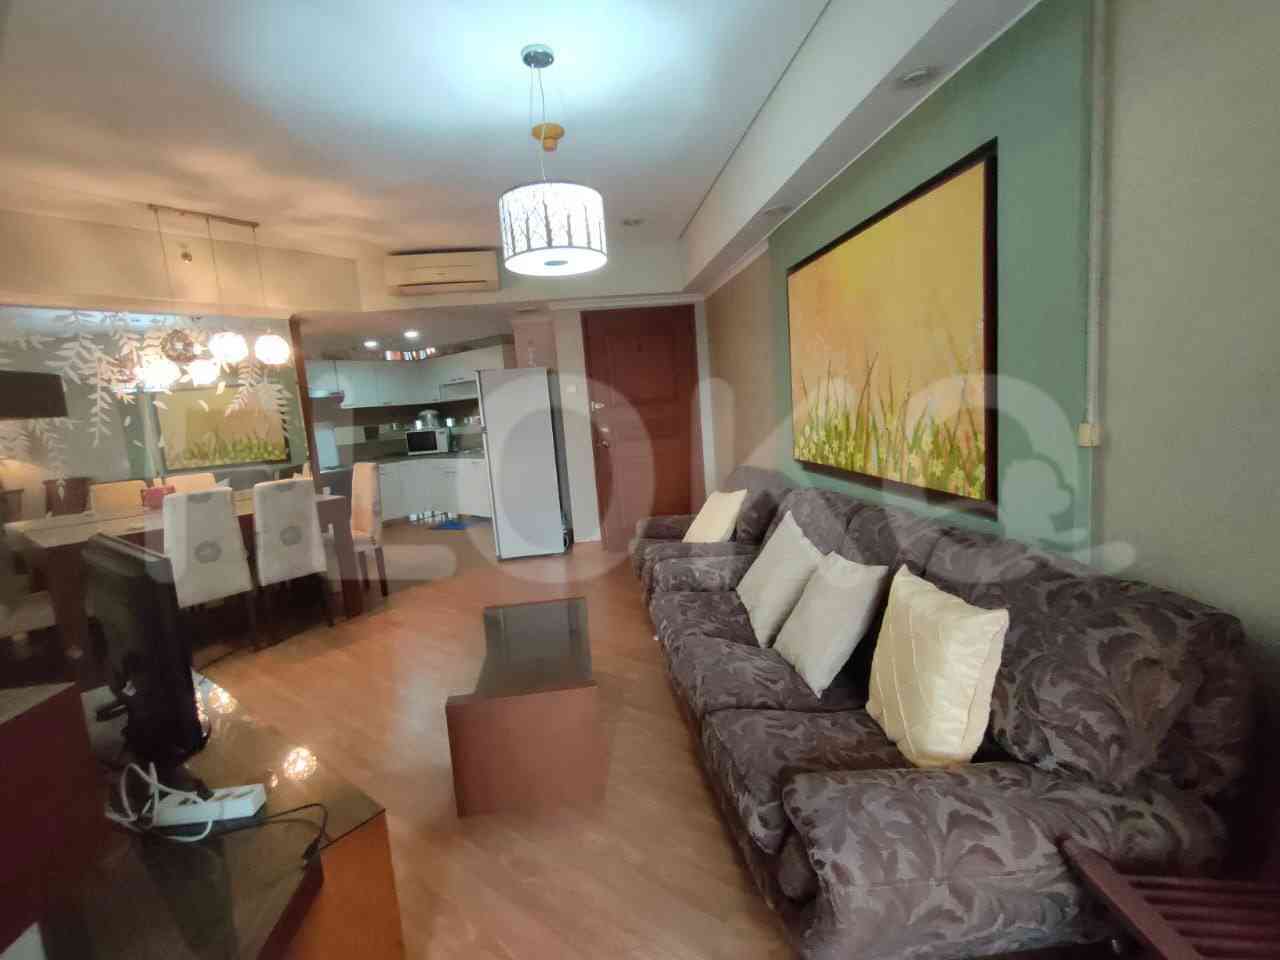 2 Bedroom on 21st Floor for Rent in Aryaduta Suites Semanggi - fsu916 4